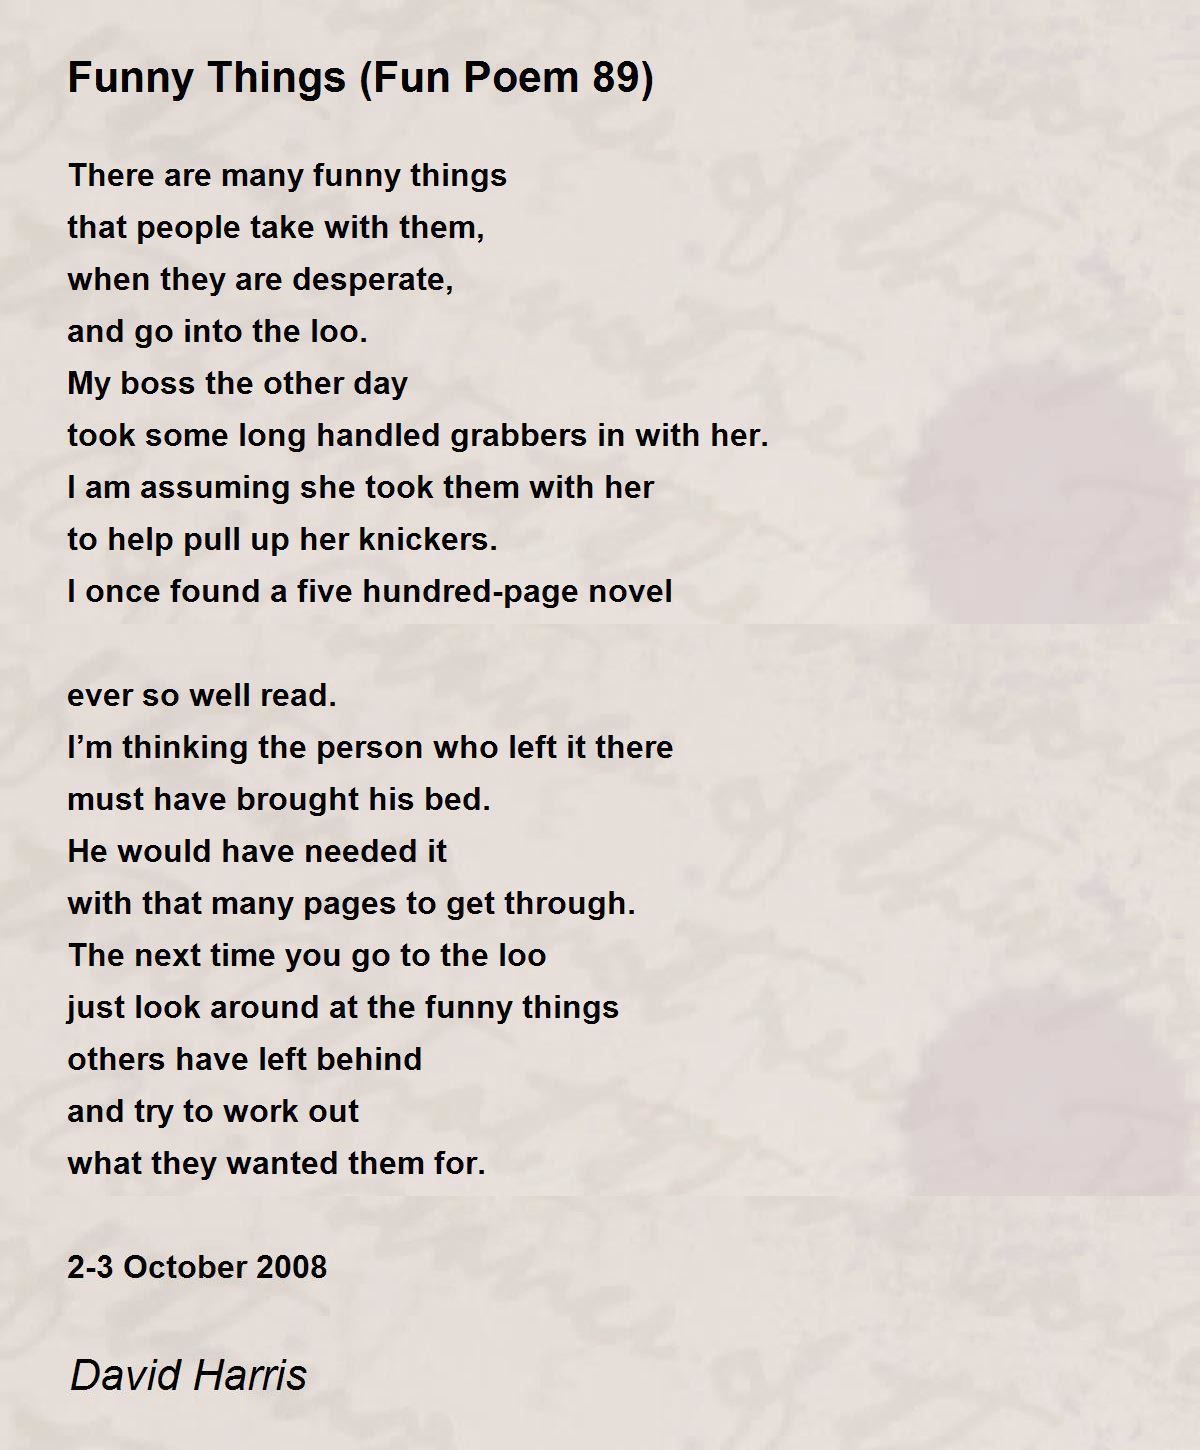 Funny Things (Fun Poem 89) - Funny Things (Fun Poem 89) Poem by David Harris